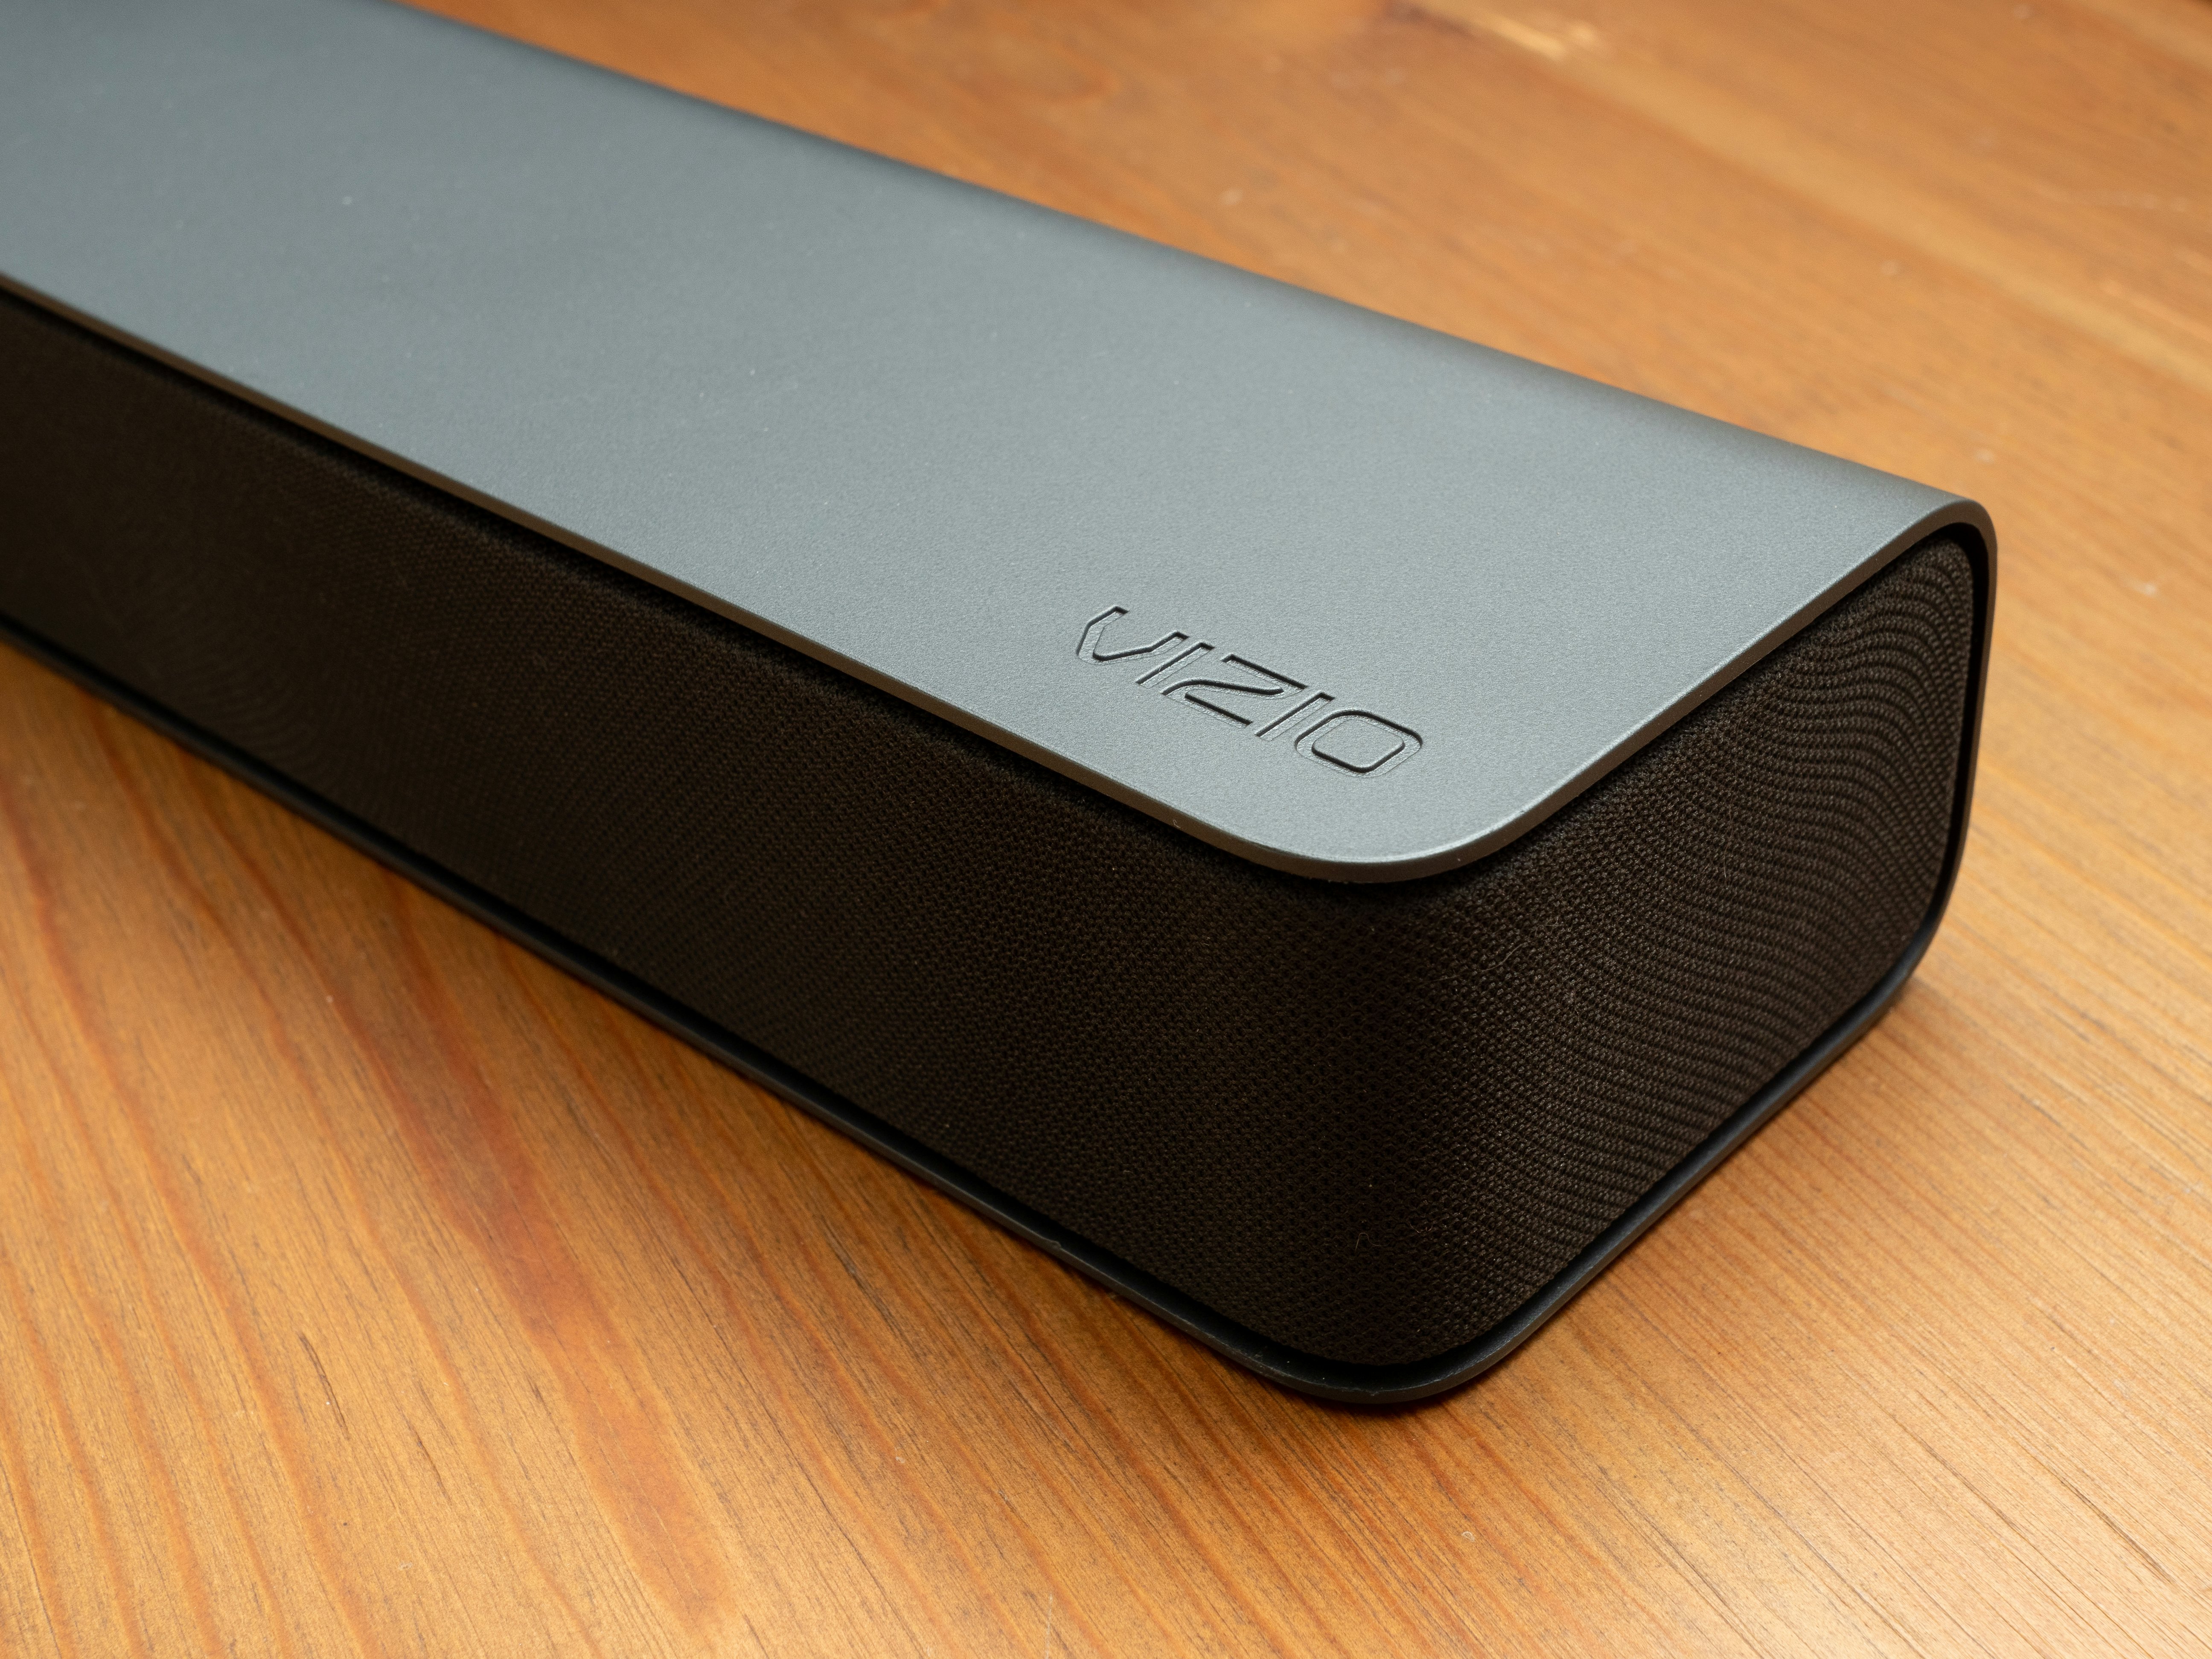 Vizio M-Series AiO soundbar review: surprising sound - Reviewed